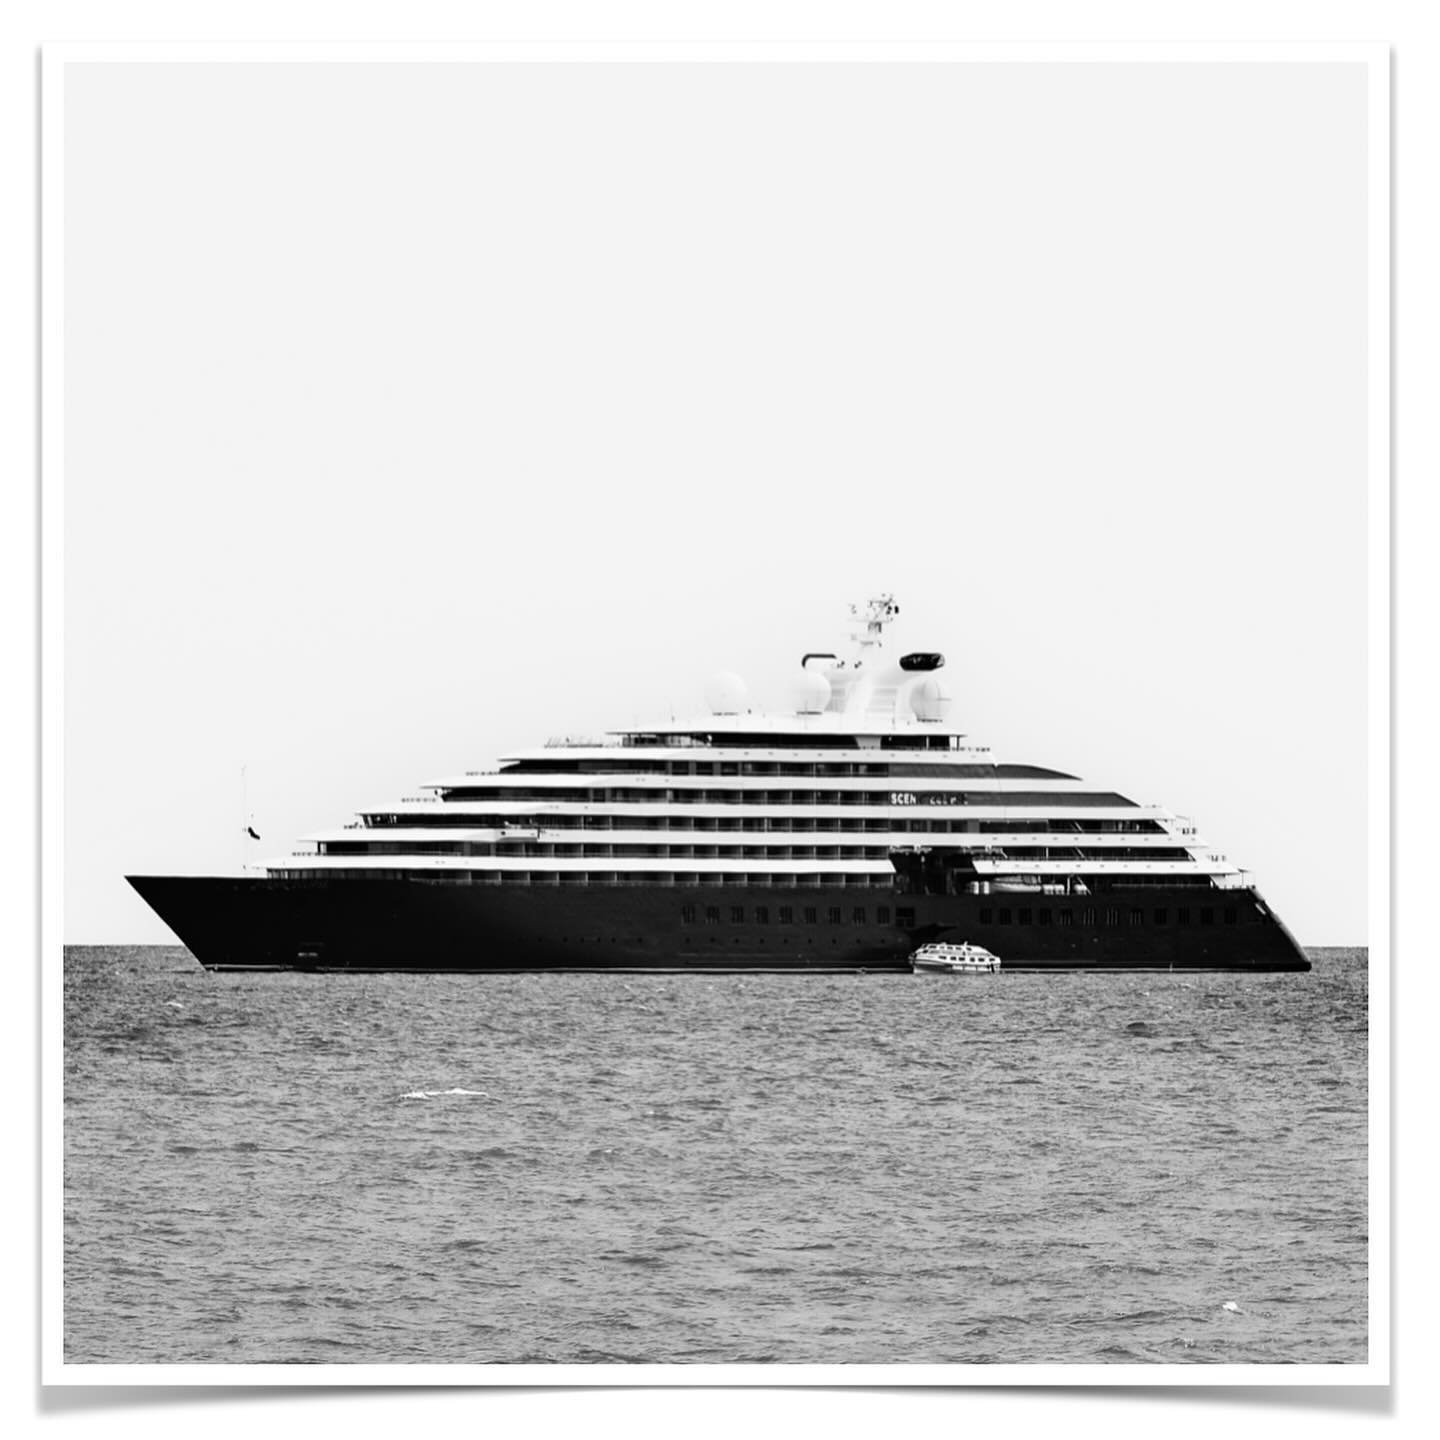 Passenger Ship Scenic Eclipse II(168m) 06 May 2024.

#streetphotography #cruise #ship #sailing #yacht #superyacht #antibes #cotedazur #frenchriviera #mediterranean #southoffrance #travel #holiday #sea #ocean #luxury #luxurylifestyle #design #architec